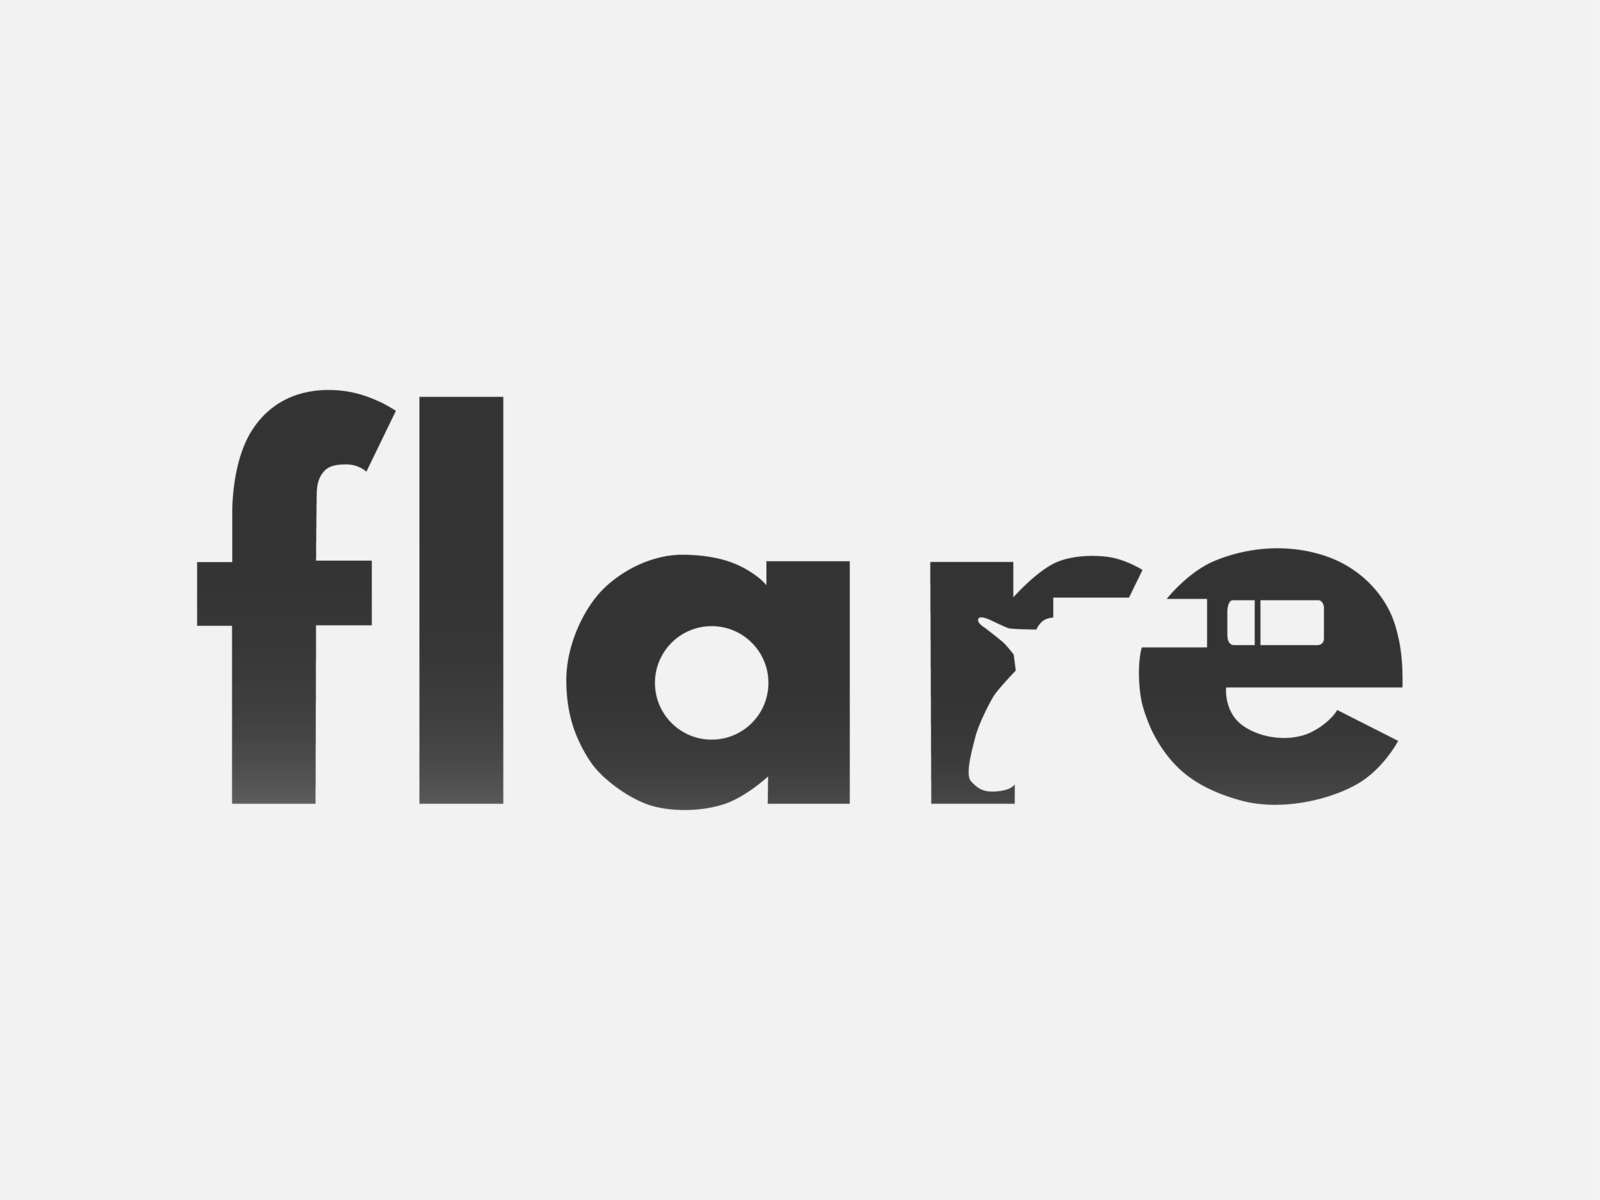 Flare Logo by Ali Hasan on Dribbble